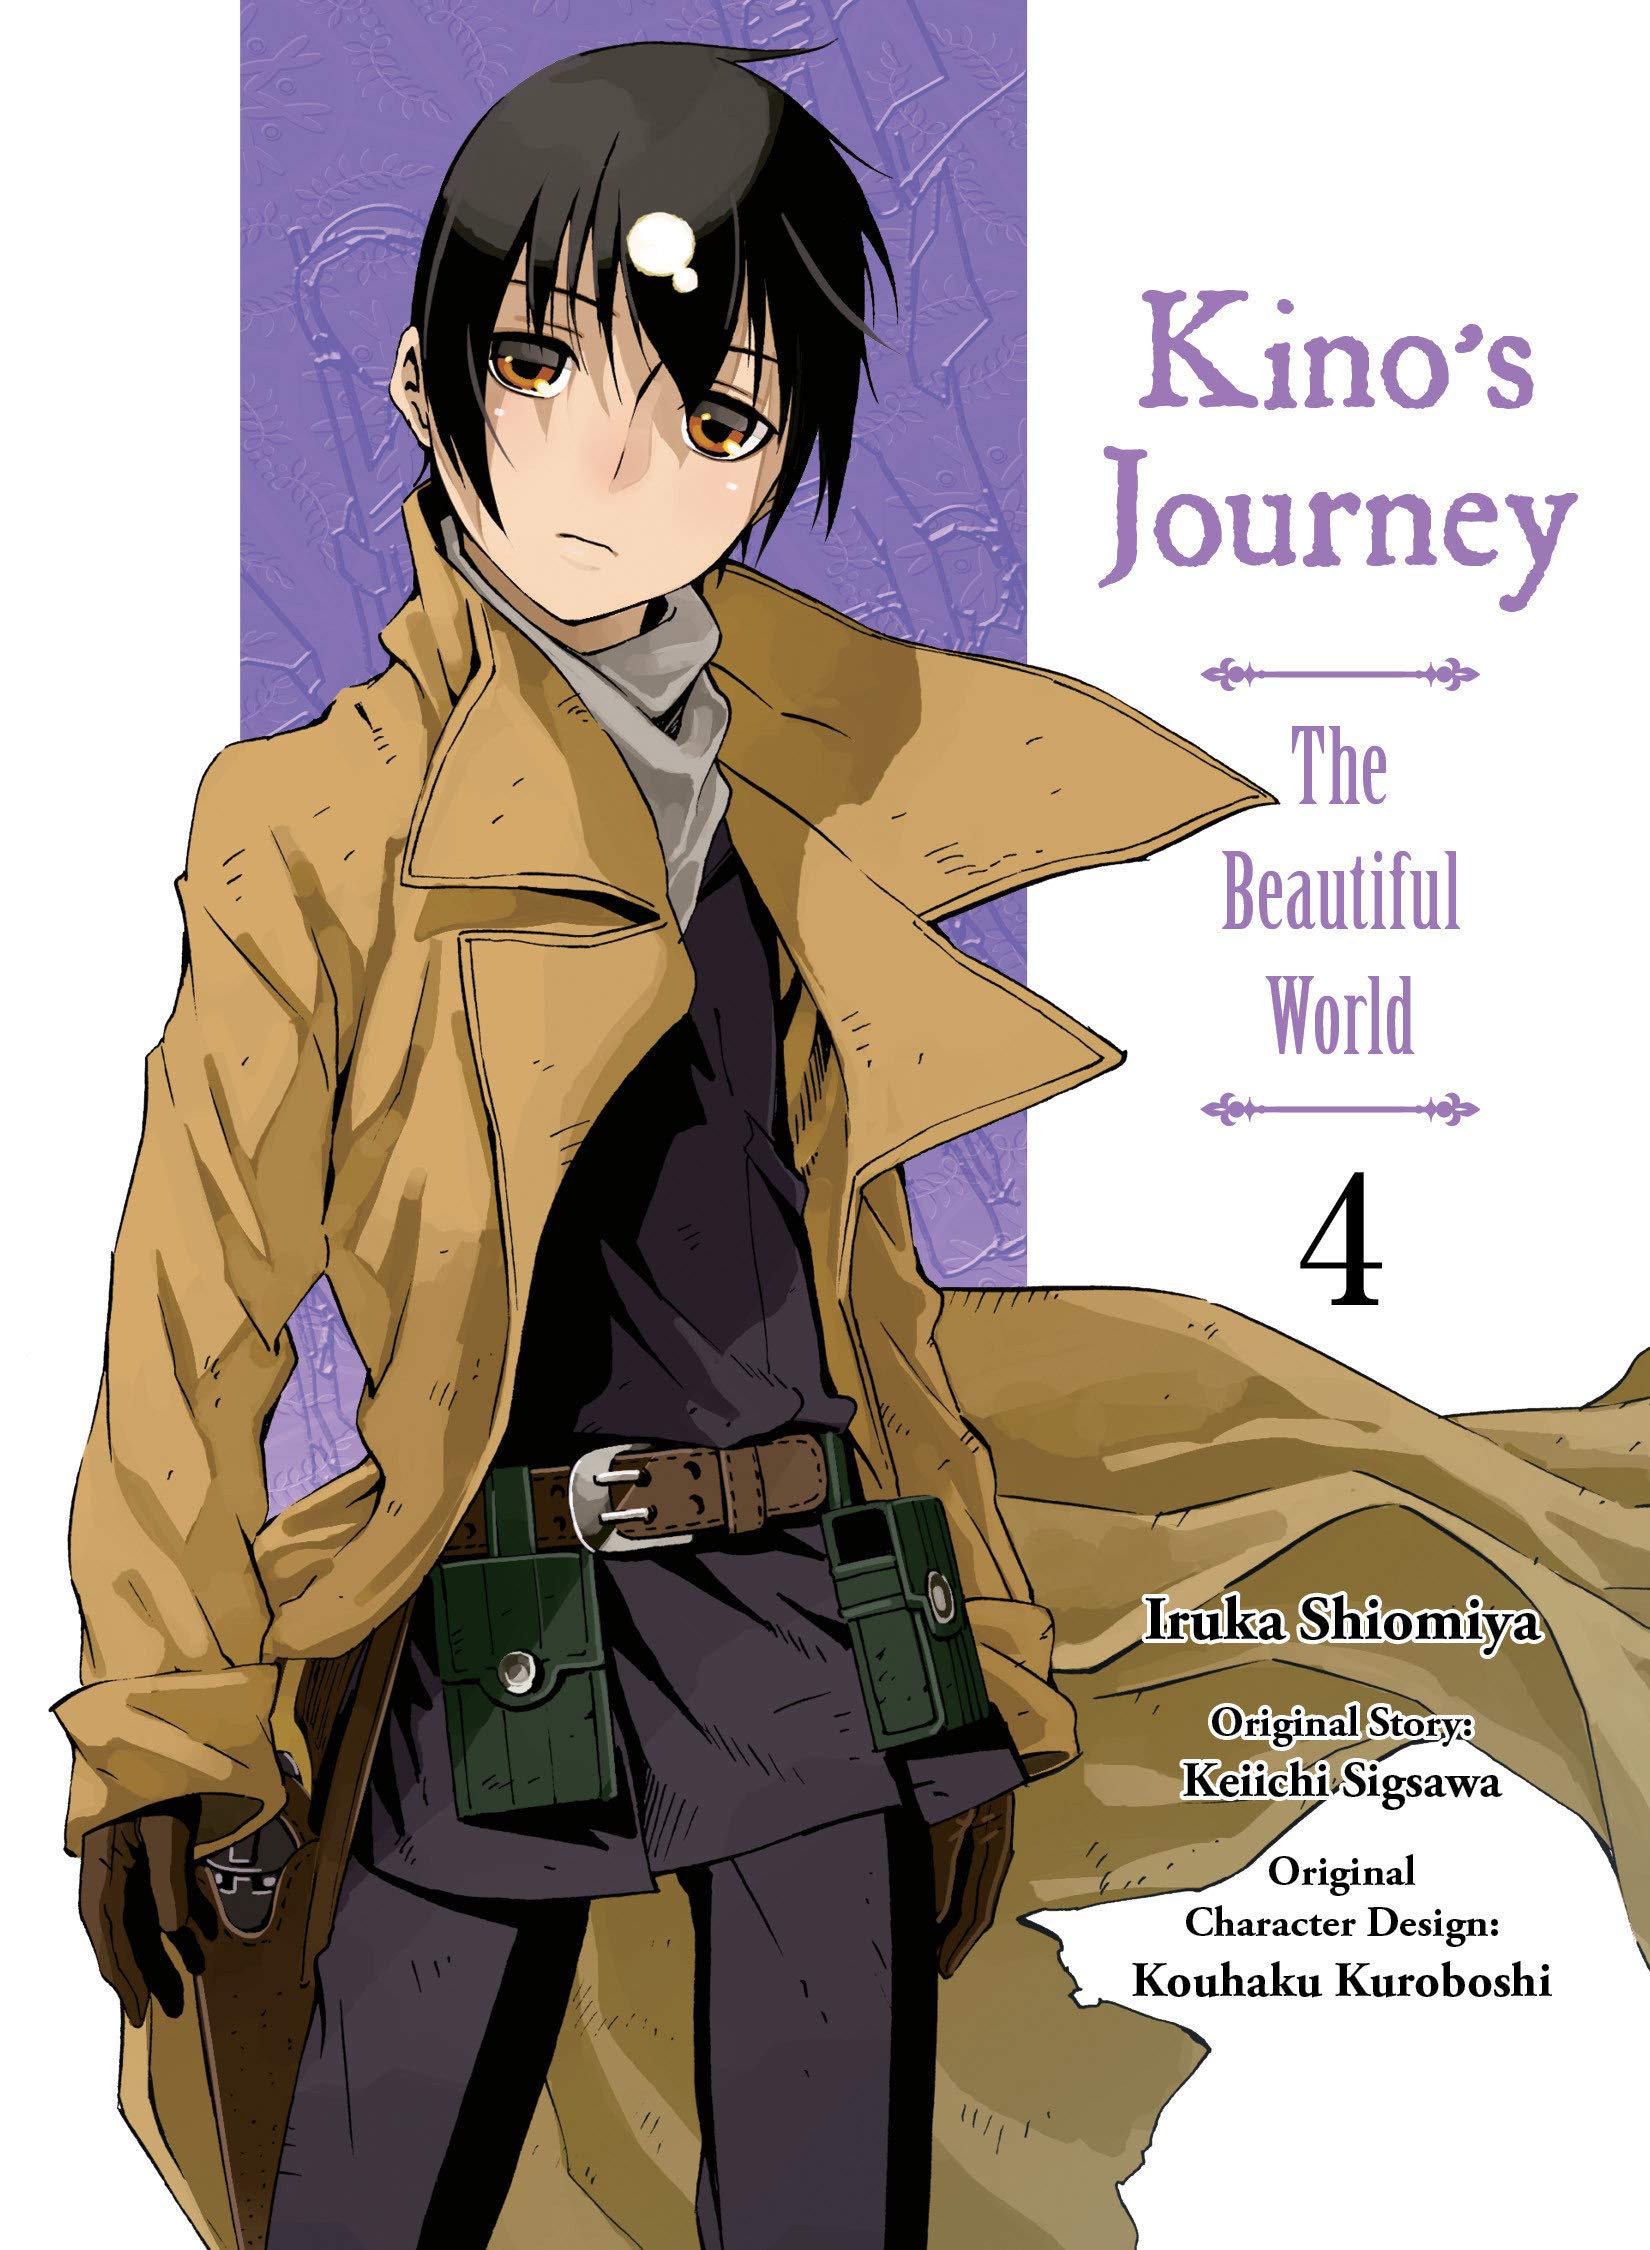 Kino's Journey- the Beautiful World 4